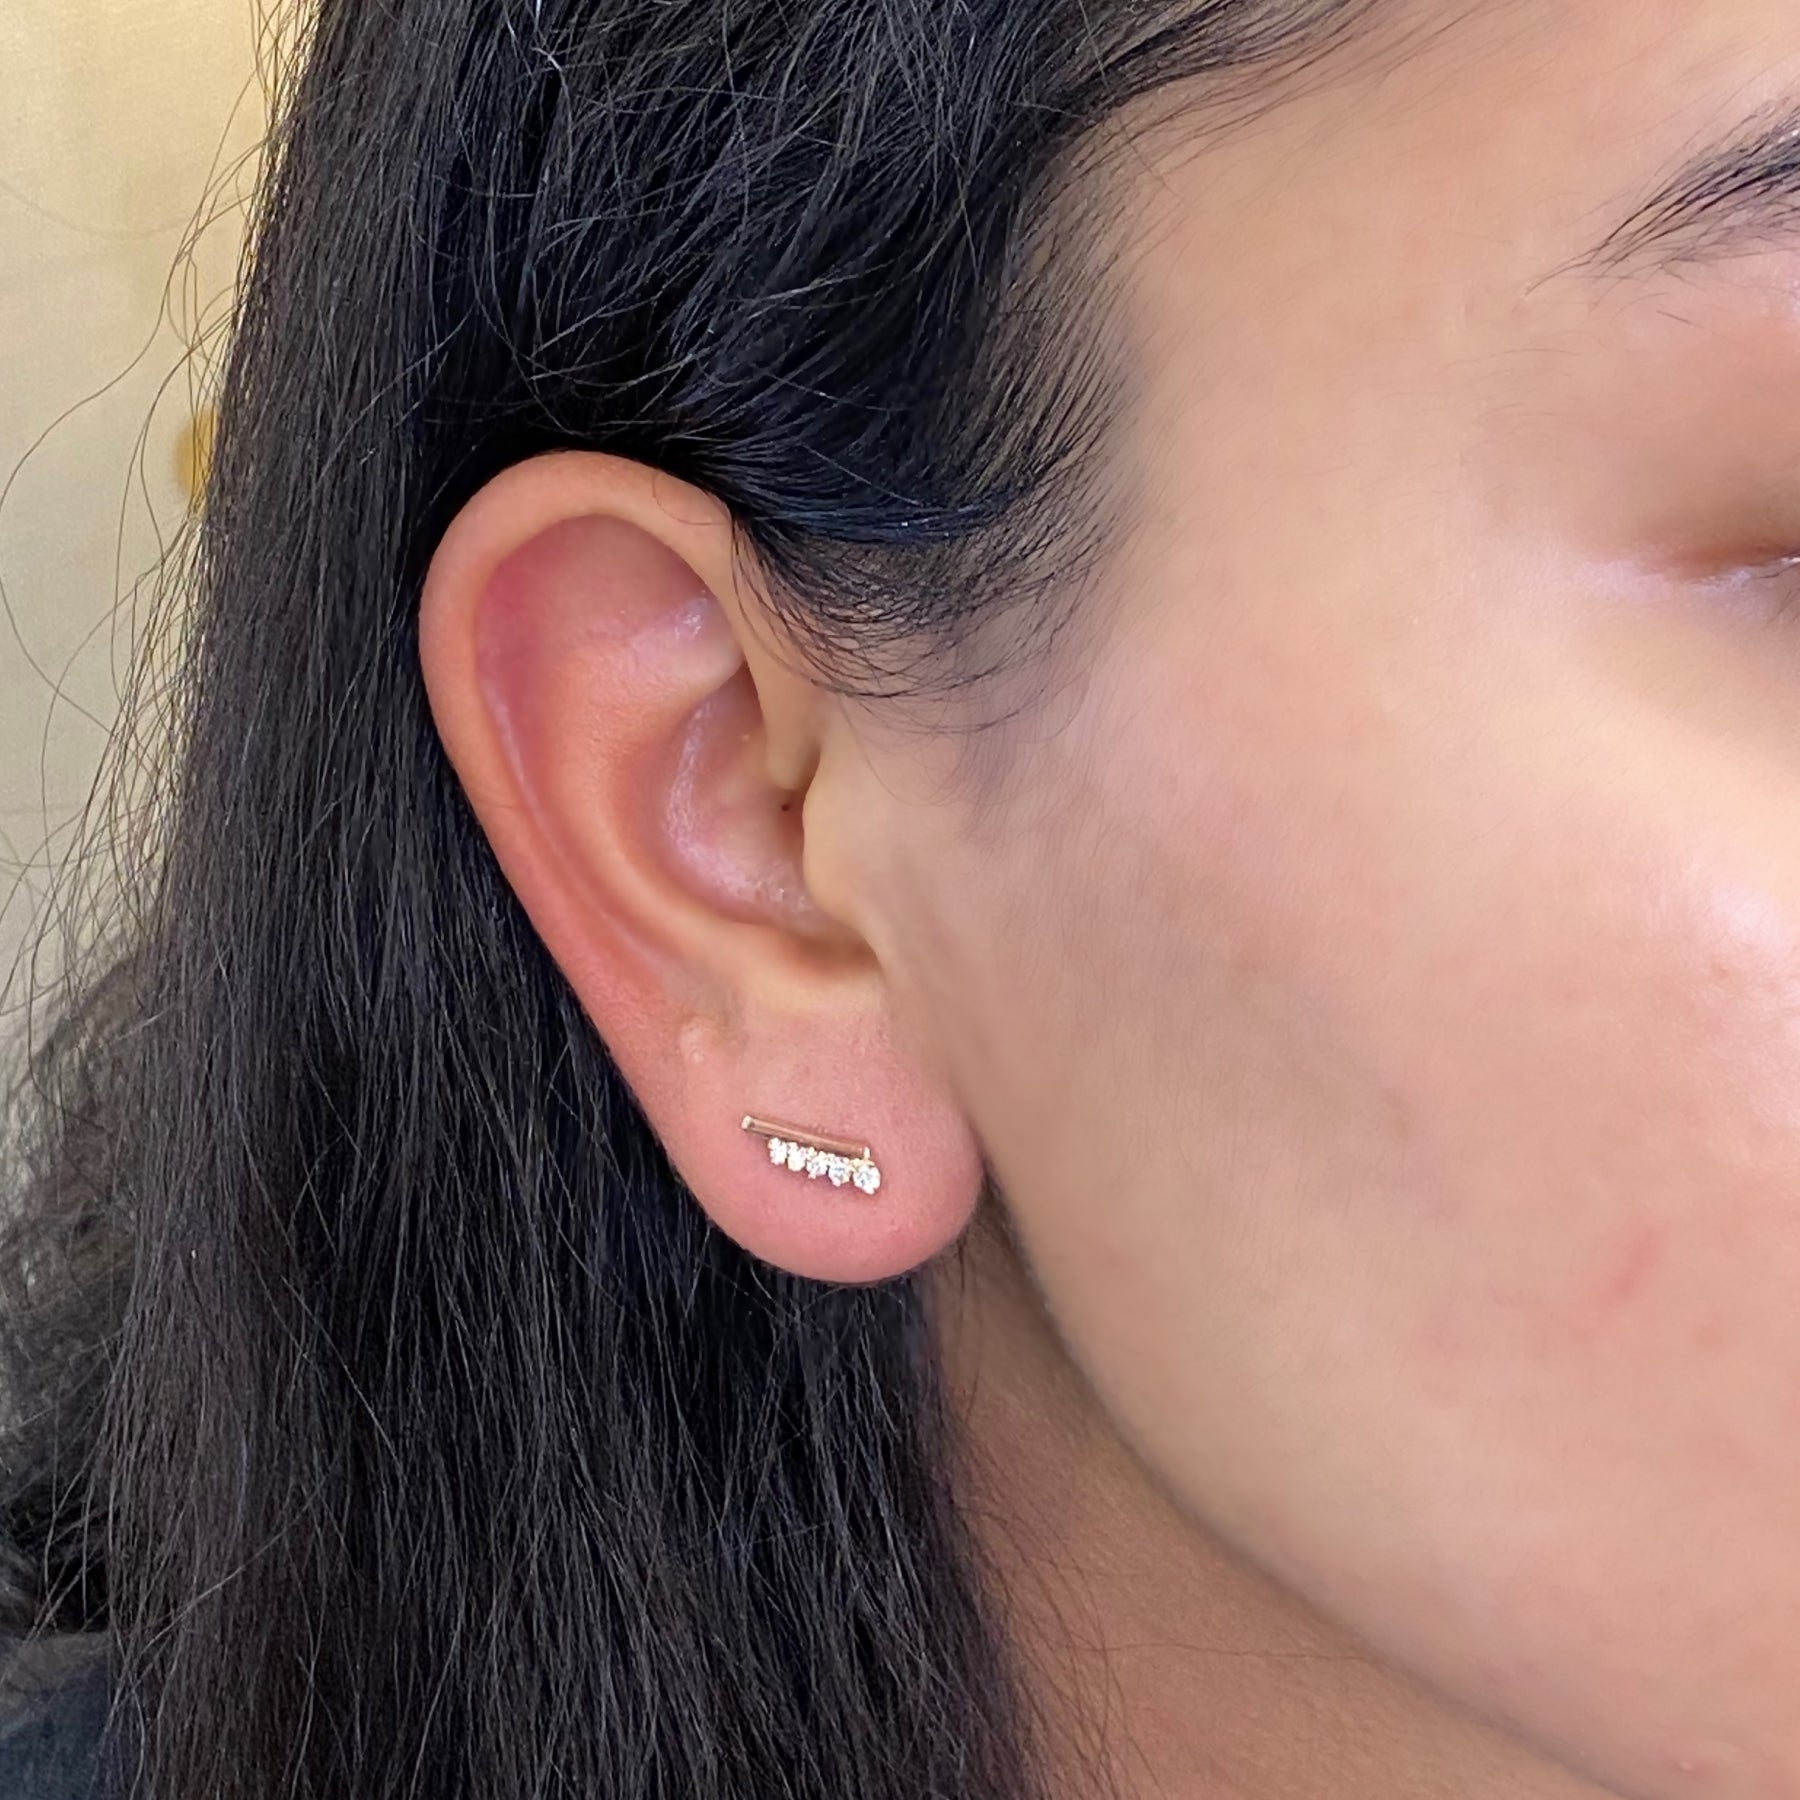 Real Rose Gold Diamond Earrings - Studs, Hoops & More